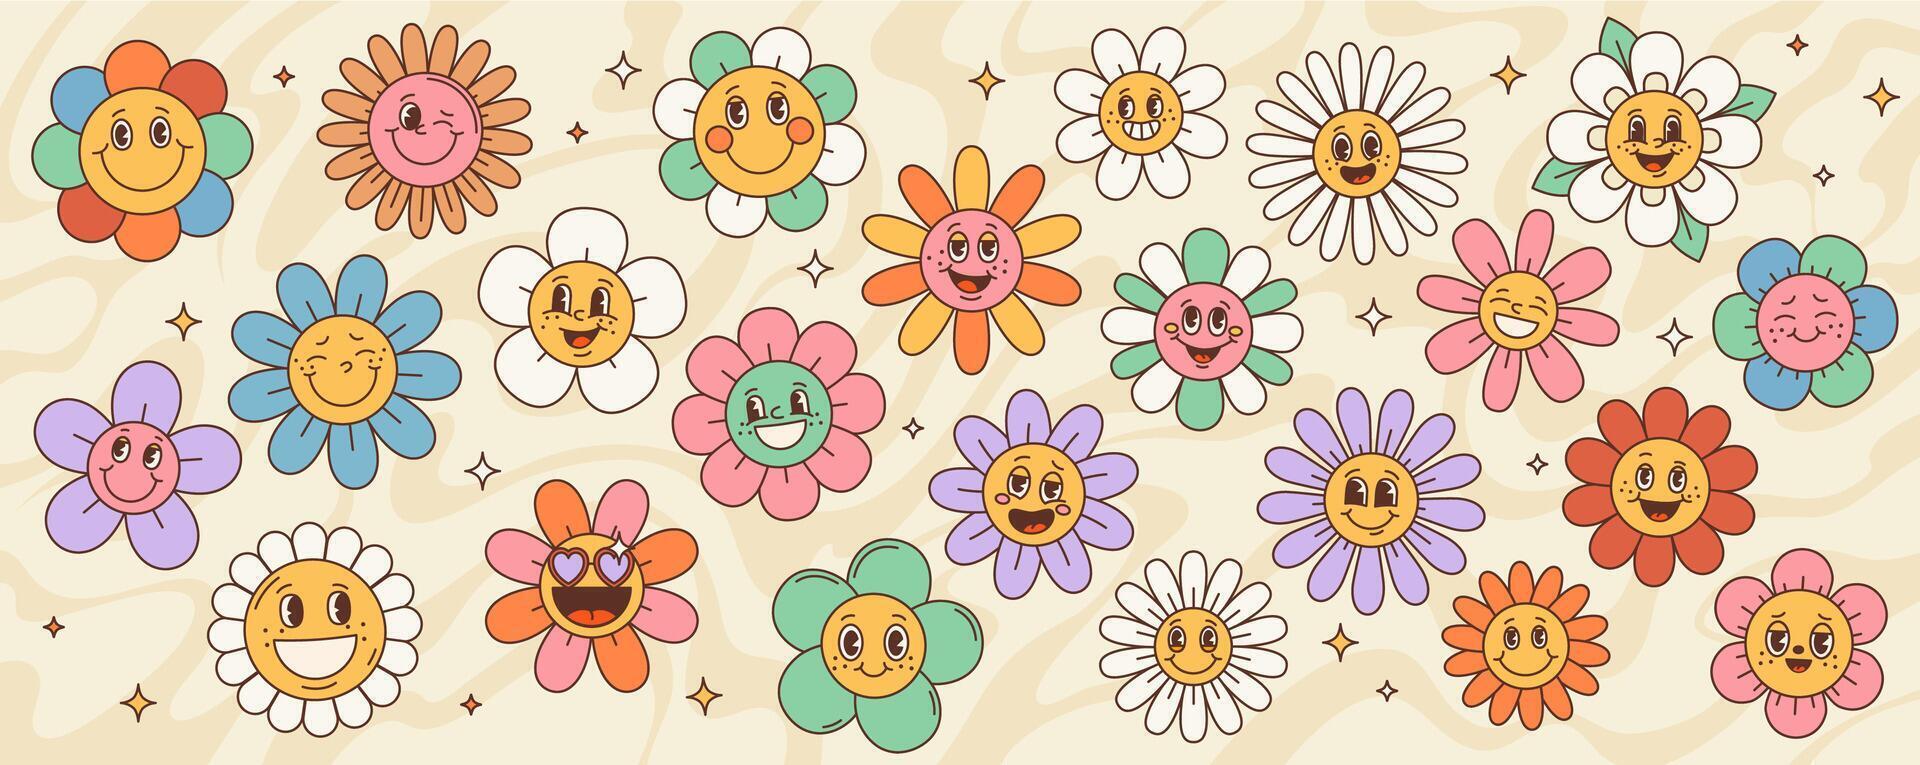 Retro hippie groovy daisy sunflower characters vector